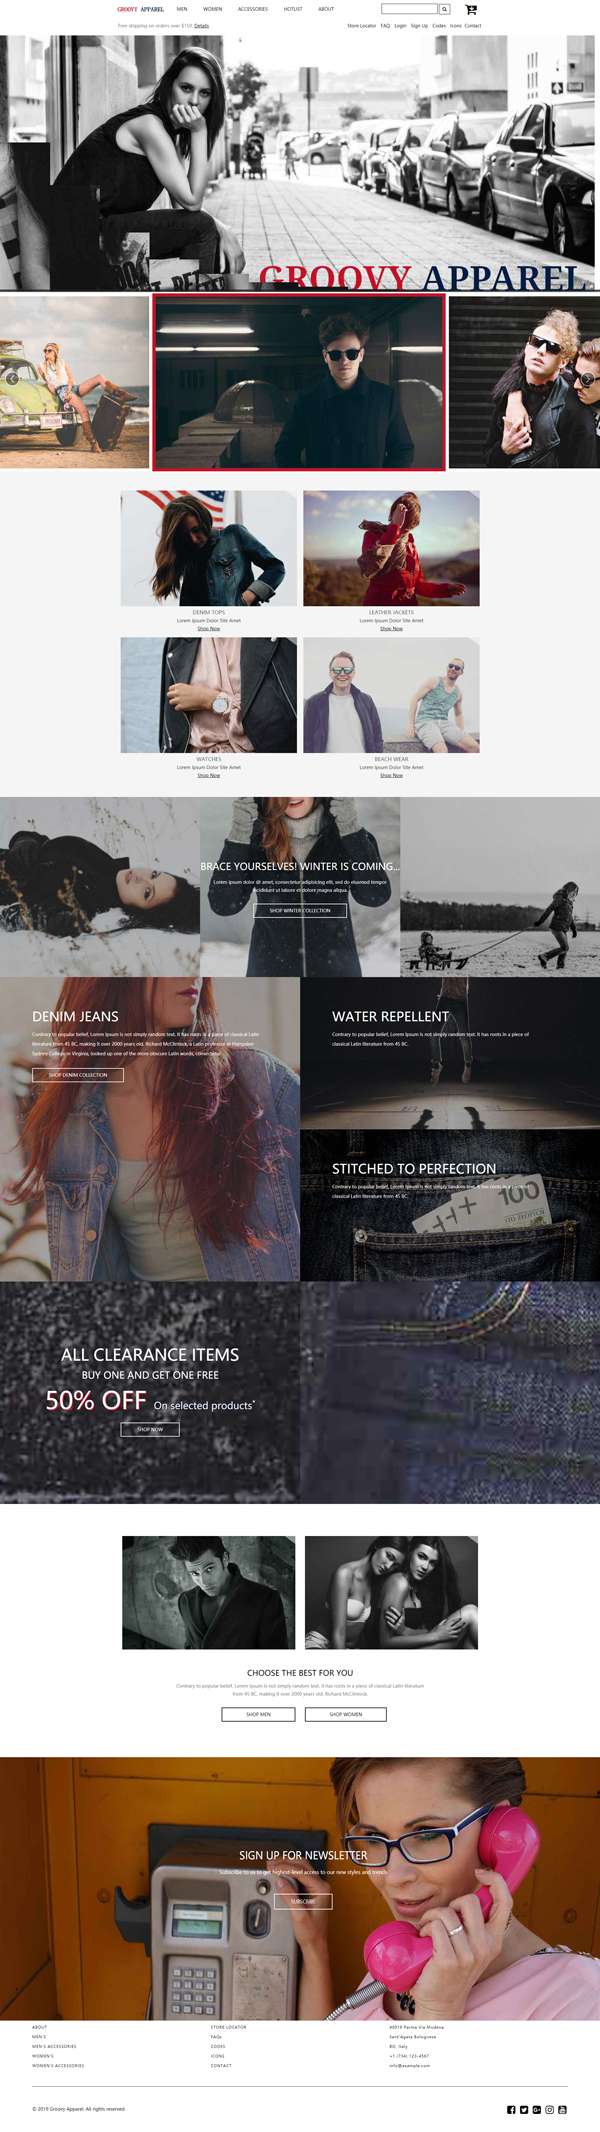 时尚服装商城Bootstrap响应式网站模板